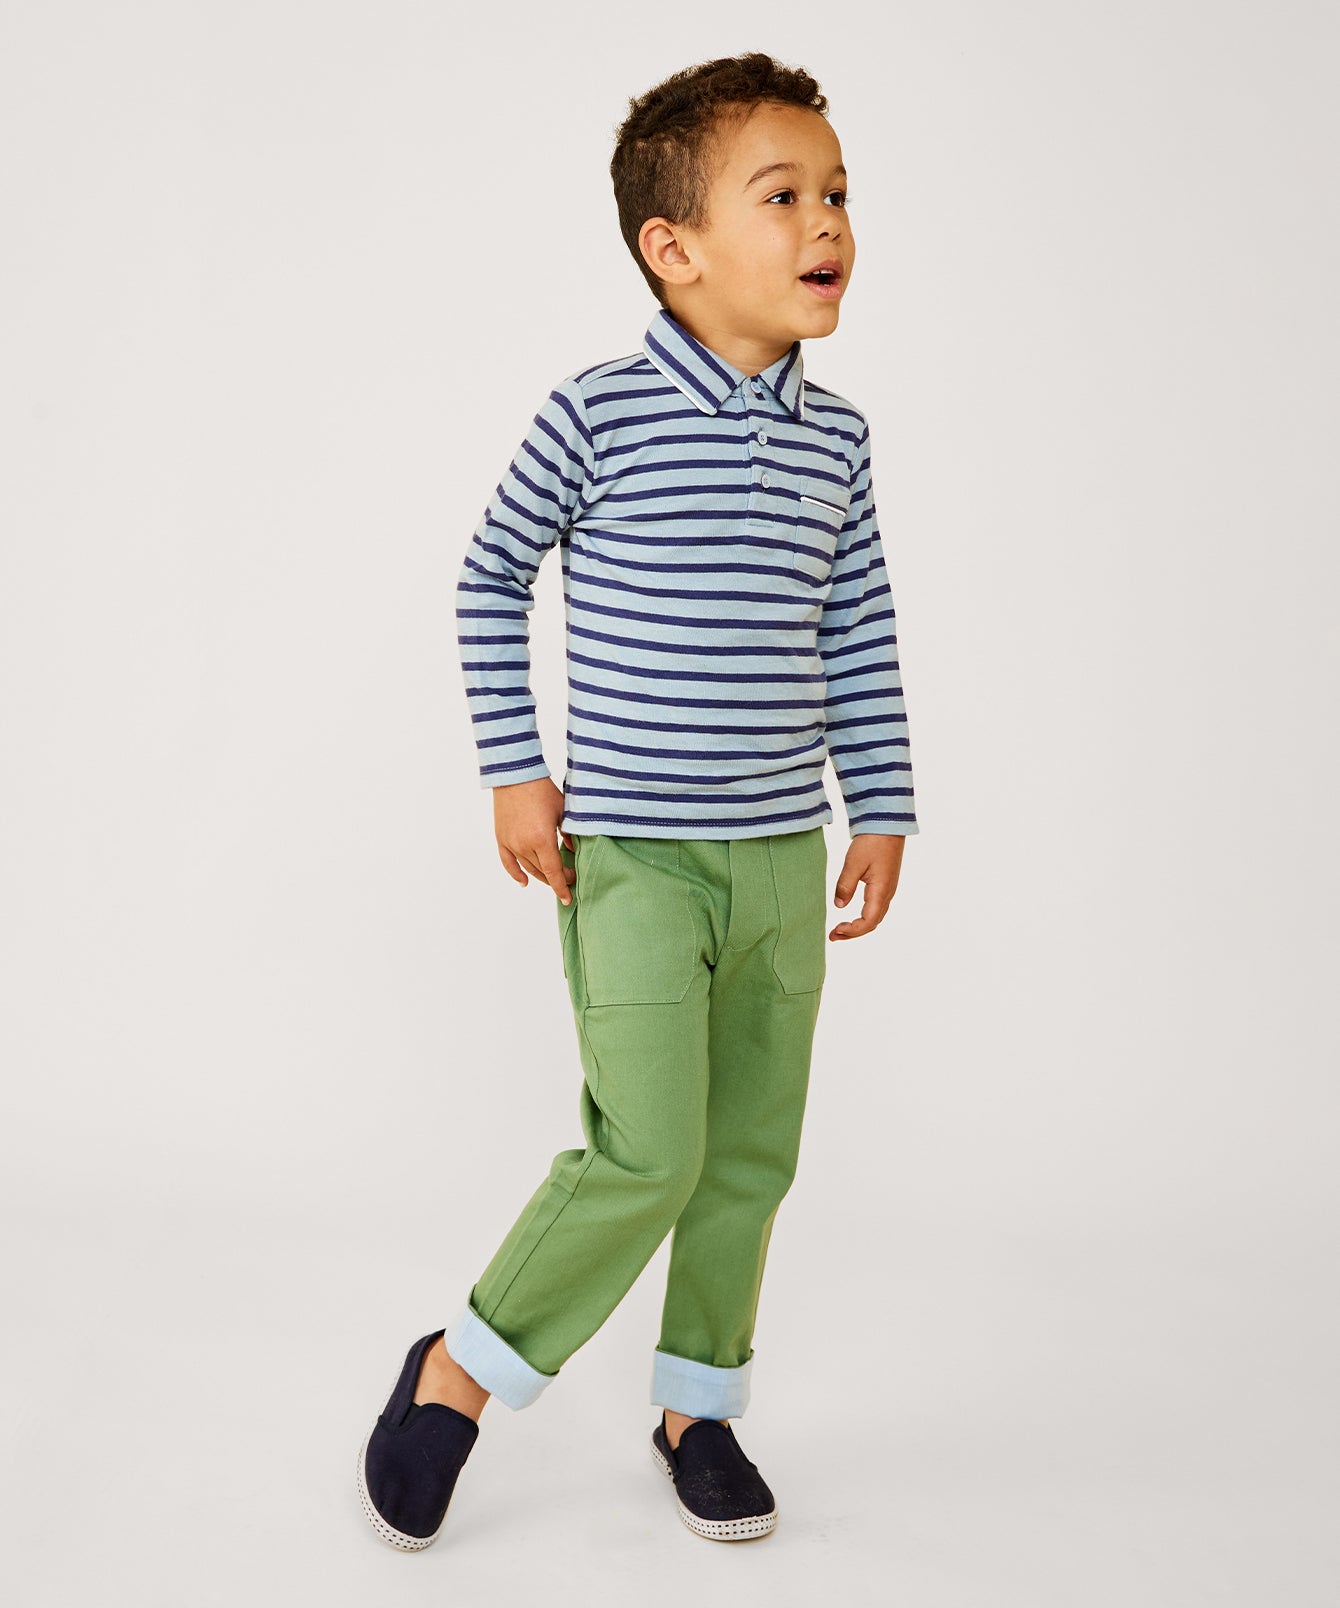 Bagilaanoe 2pcs Toddler Baby Boy Long Pants Set Long Sleeve T Shirts Tops +  Stripe Print Trousers 6M 12M 18M 24M 3T Kids Casual Outfits - Walmart.com